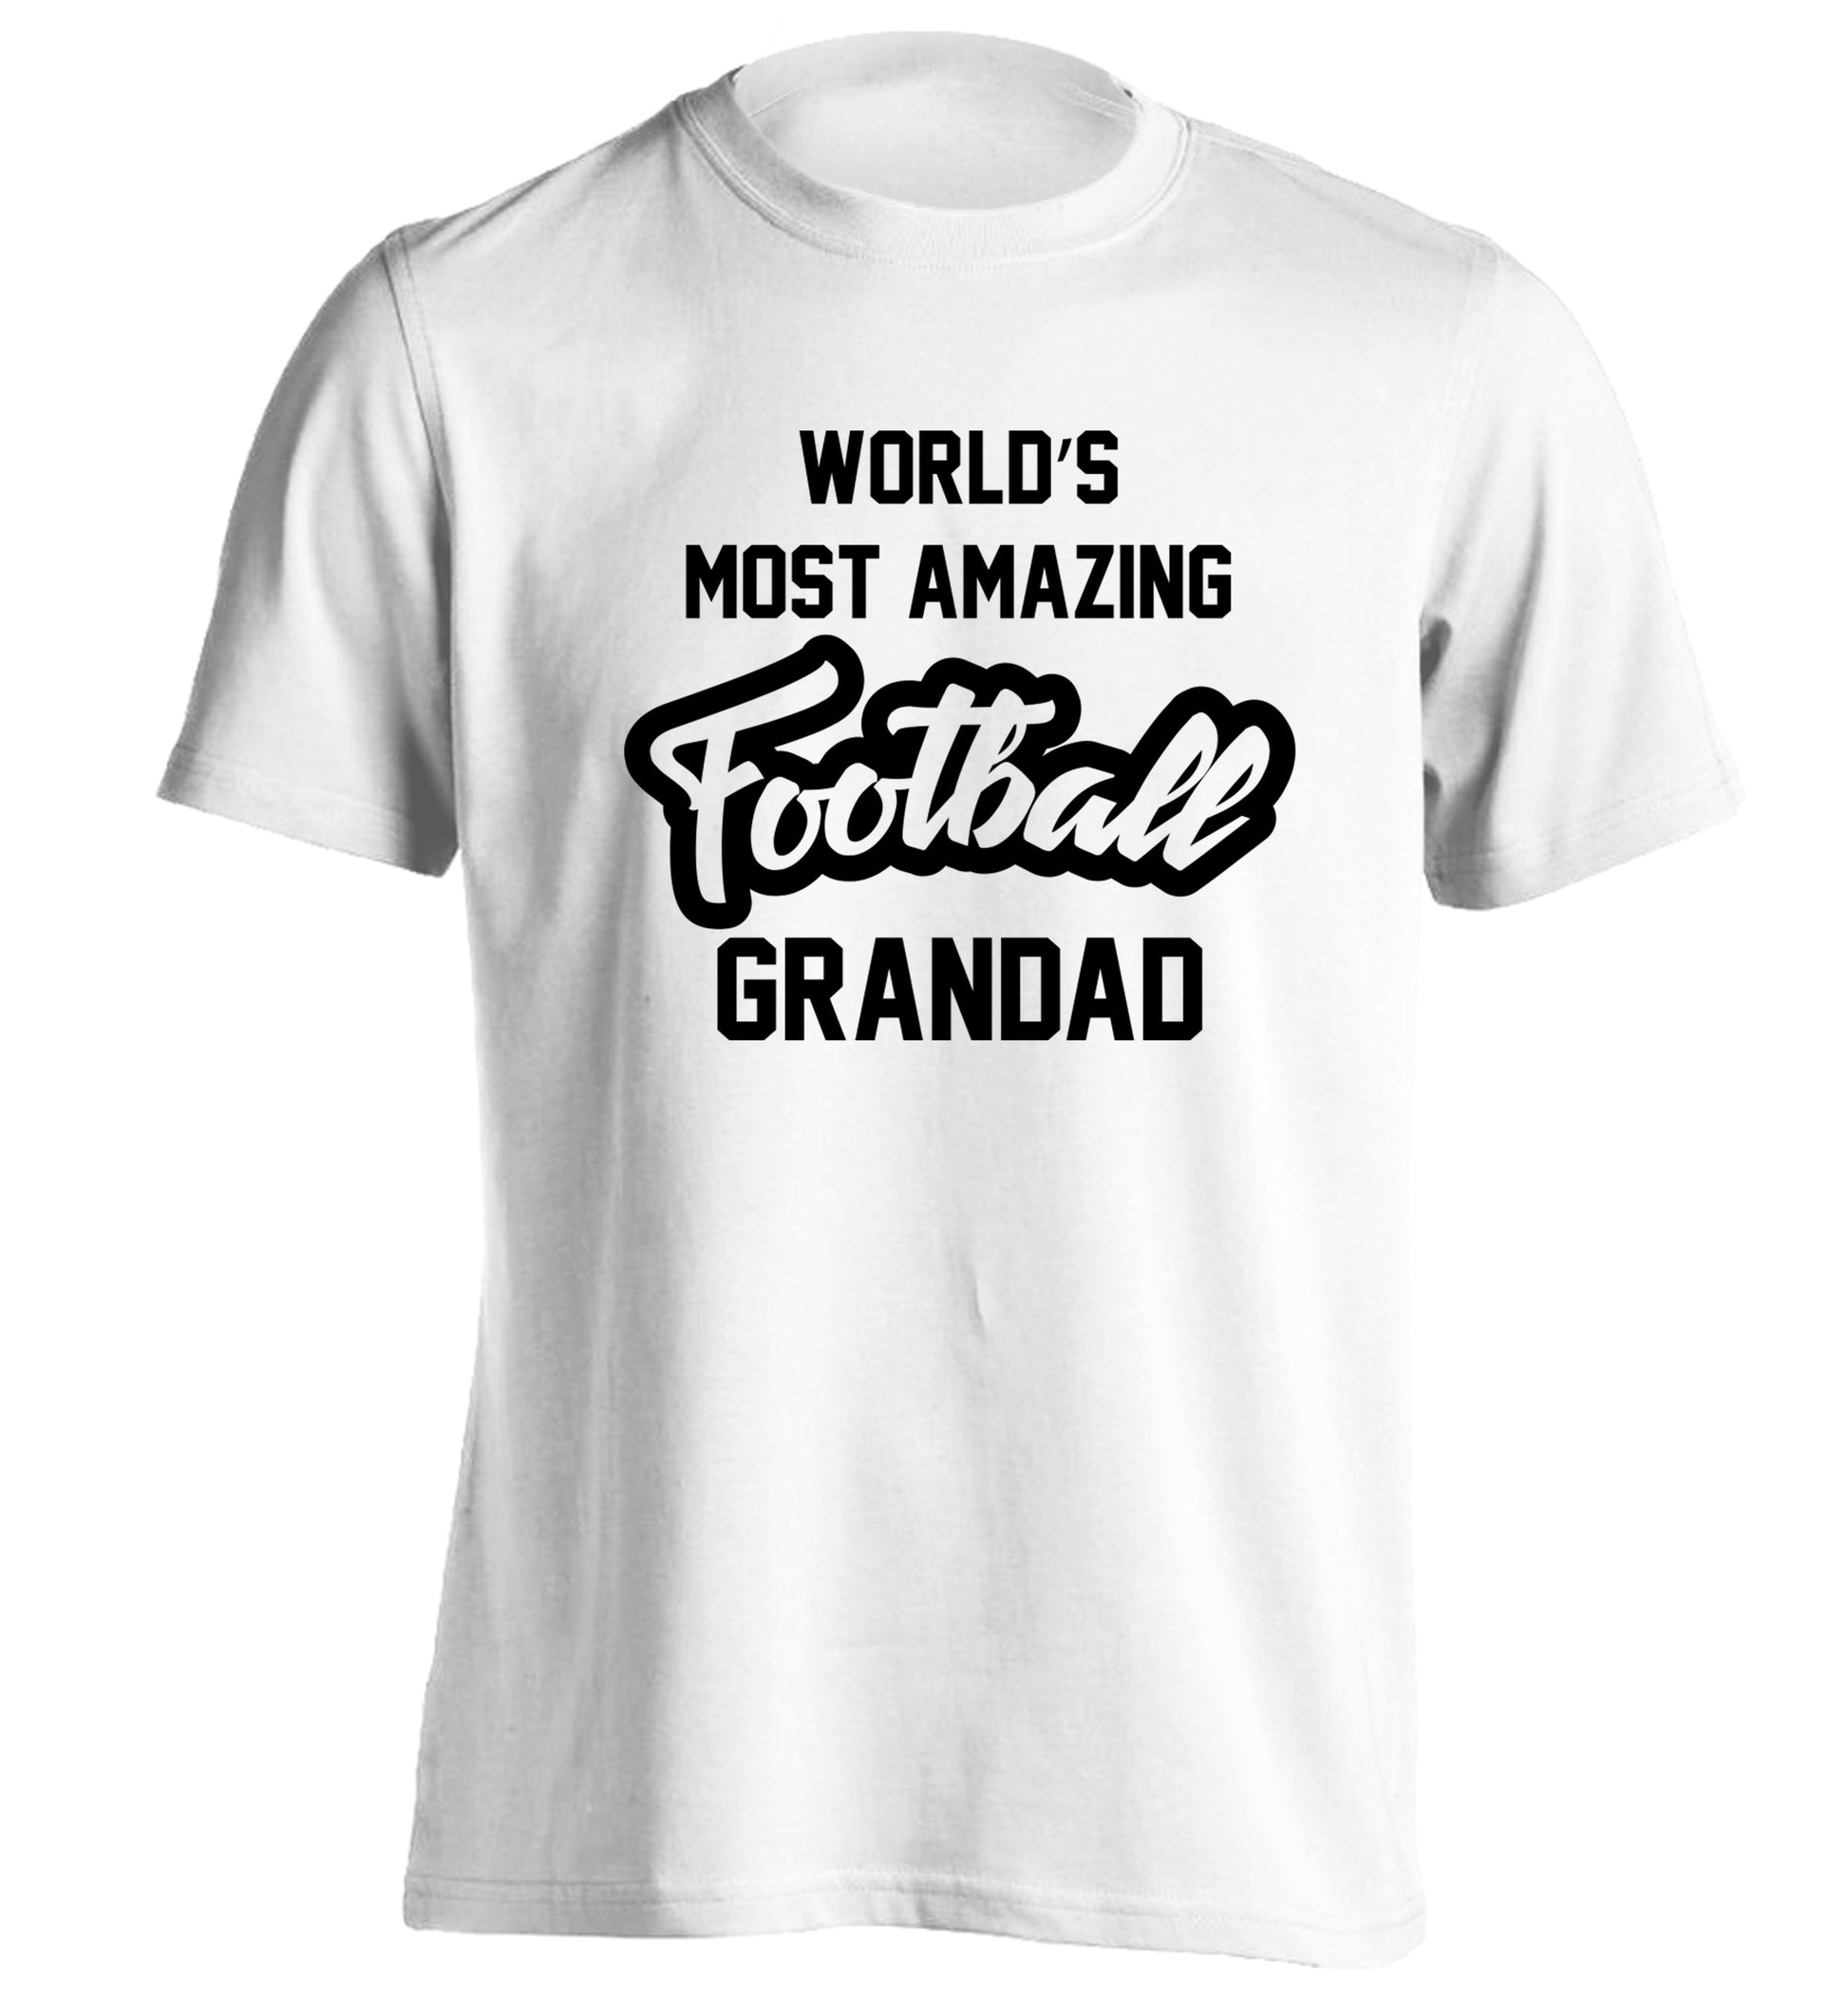 Worlds most amazing football grandad adults unisexwhite Tshirt 2XL